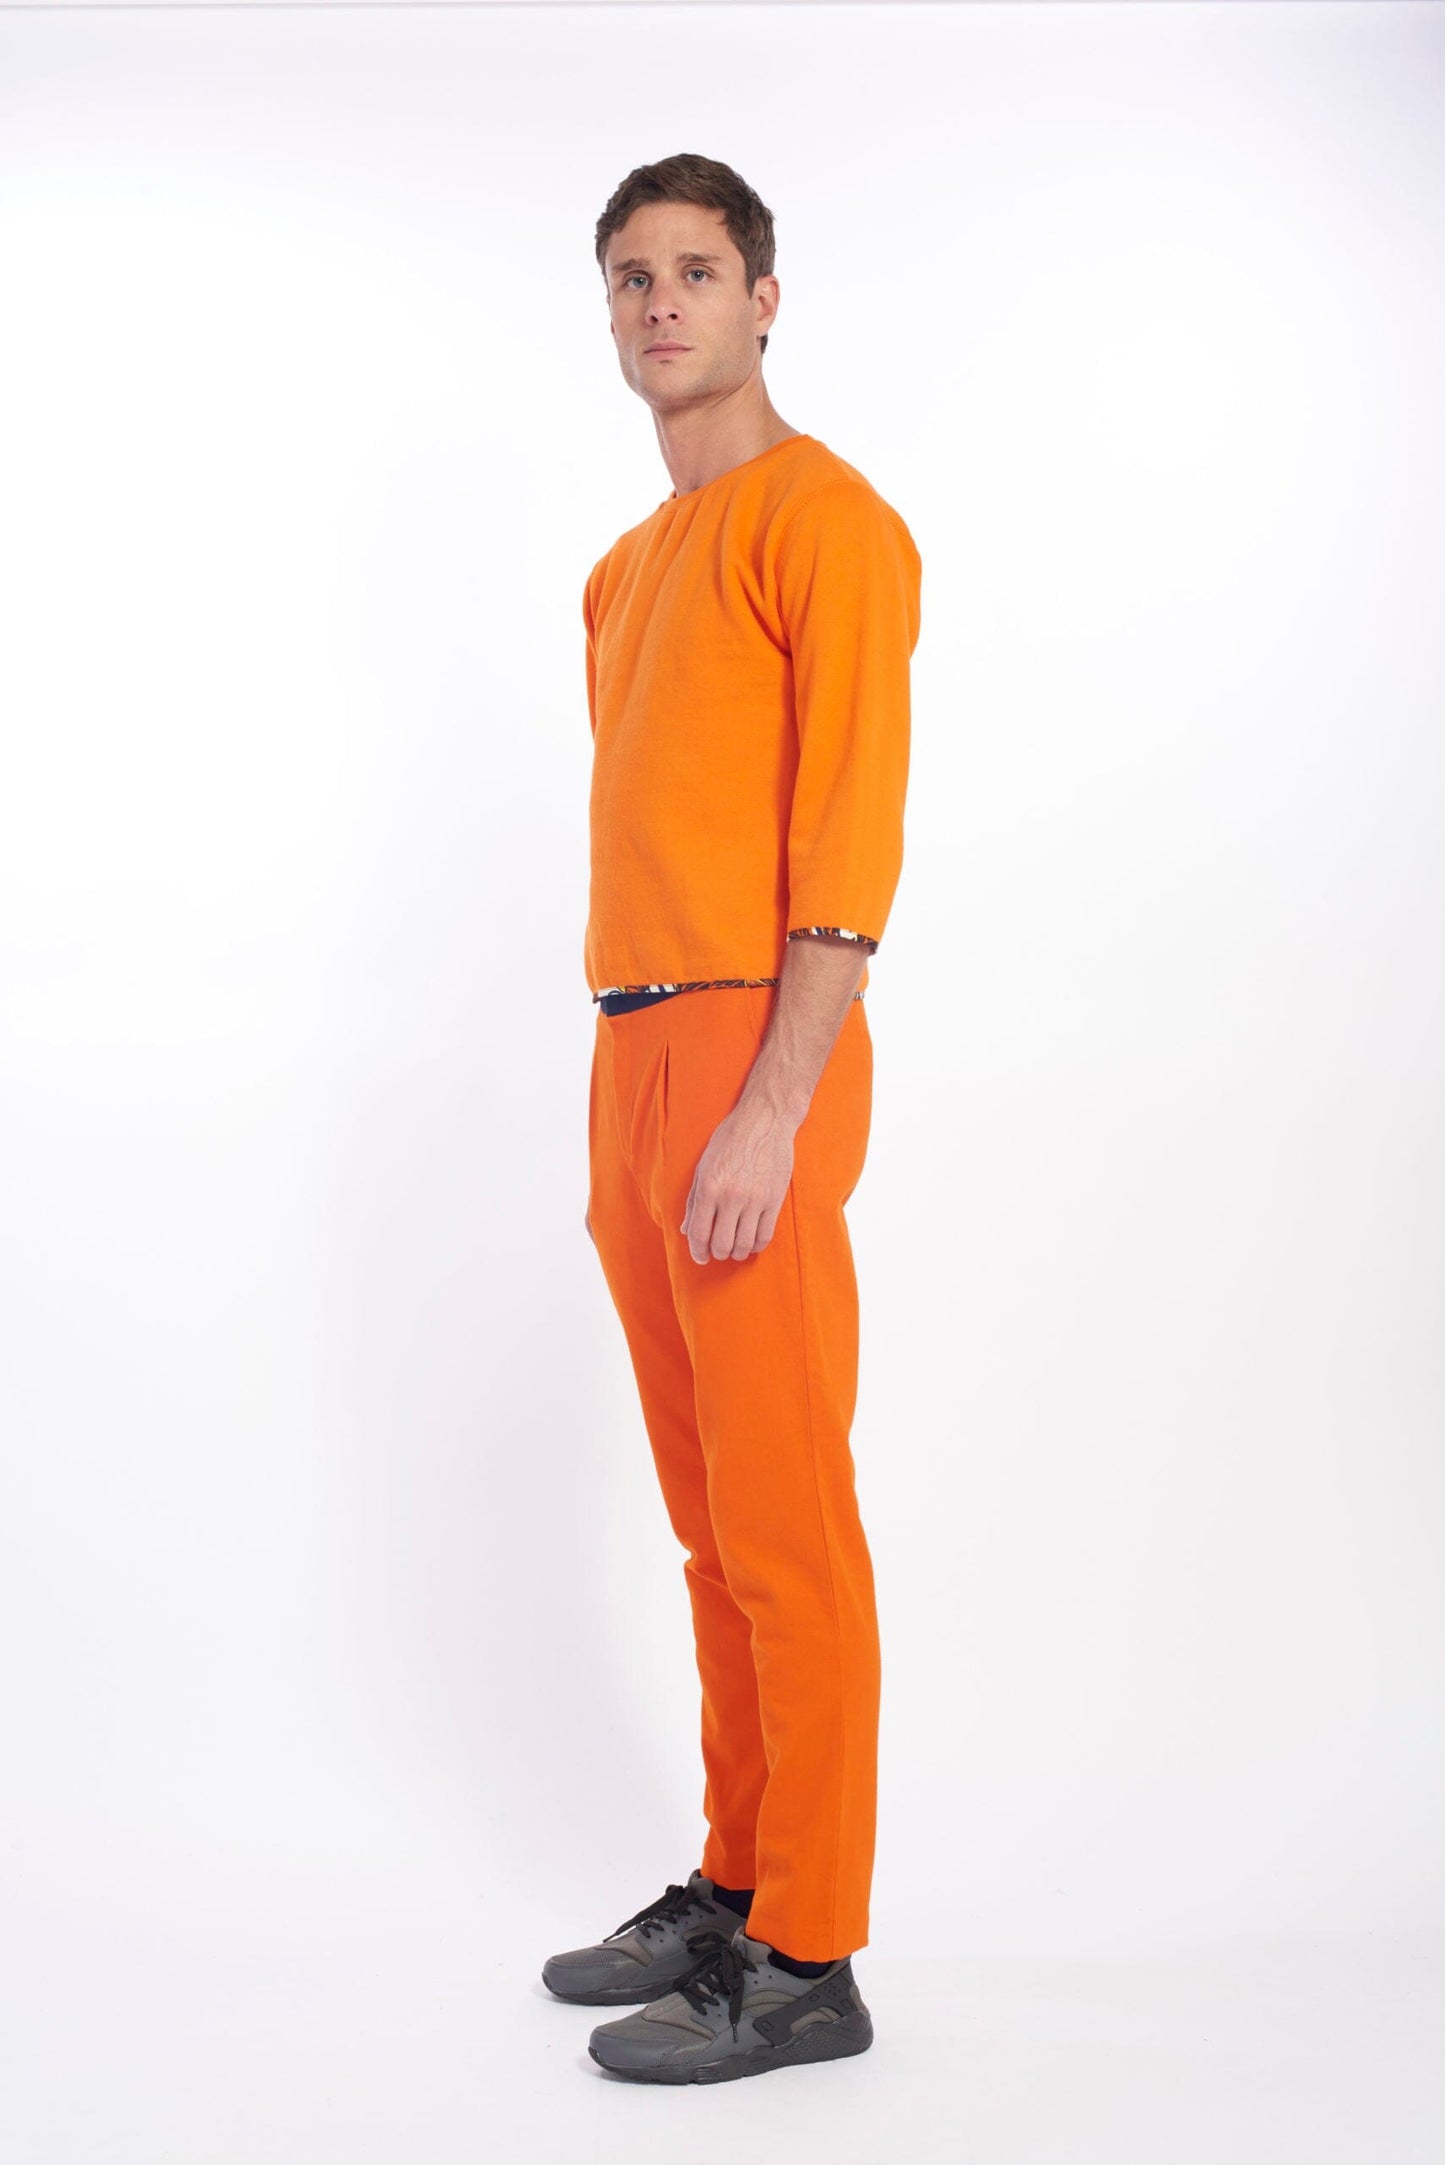 Tiobly - Orange Pants LaurenceAirline 